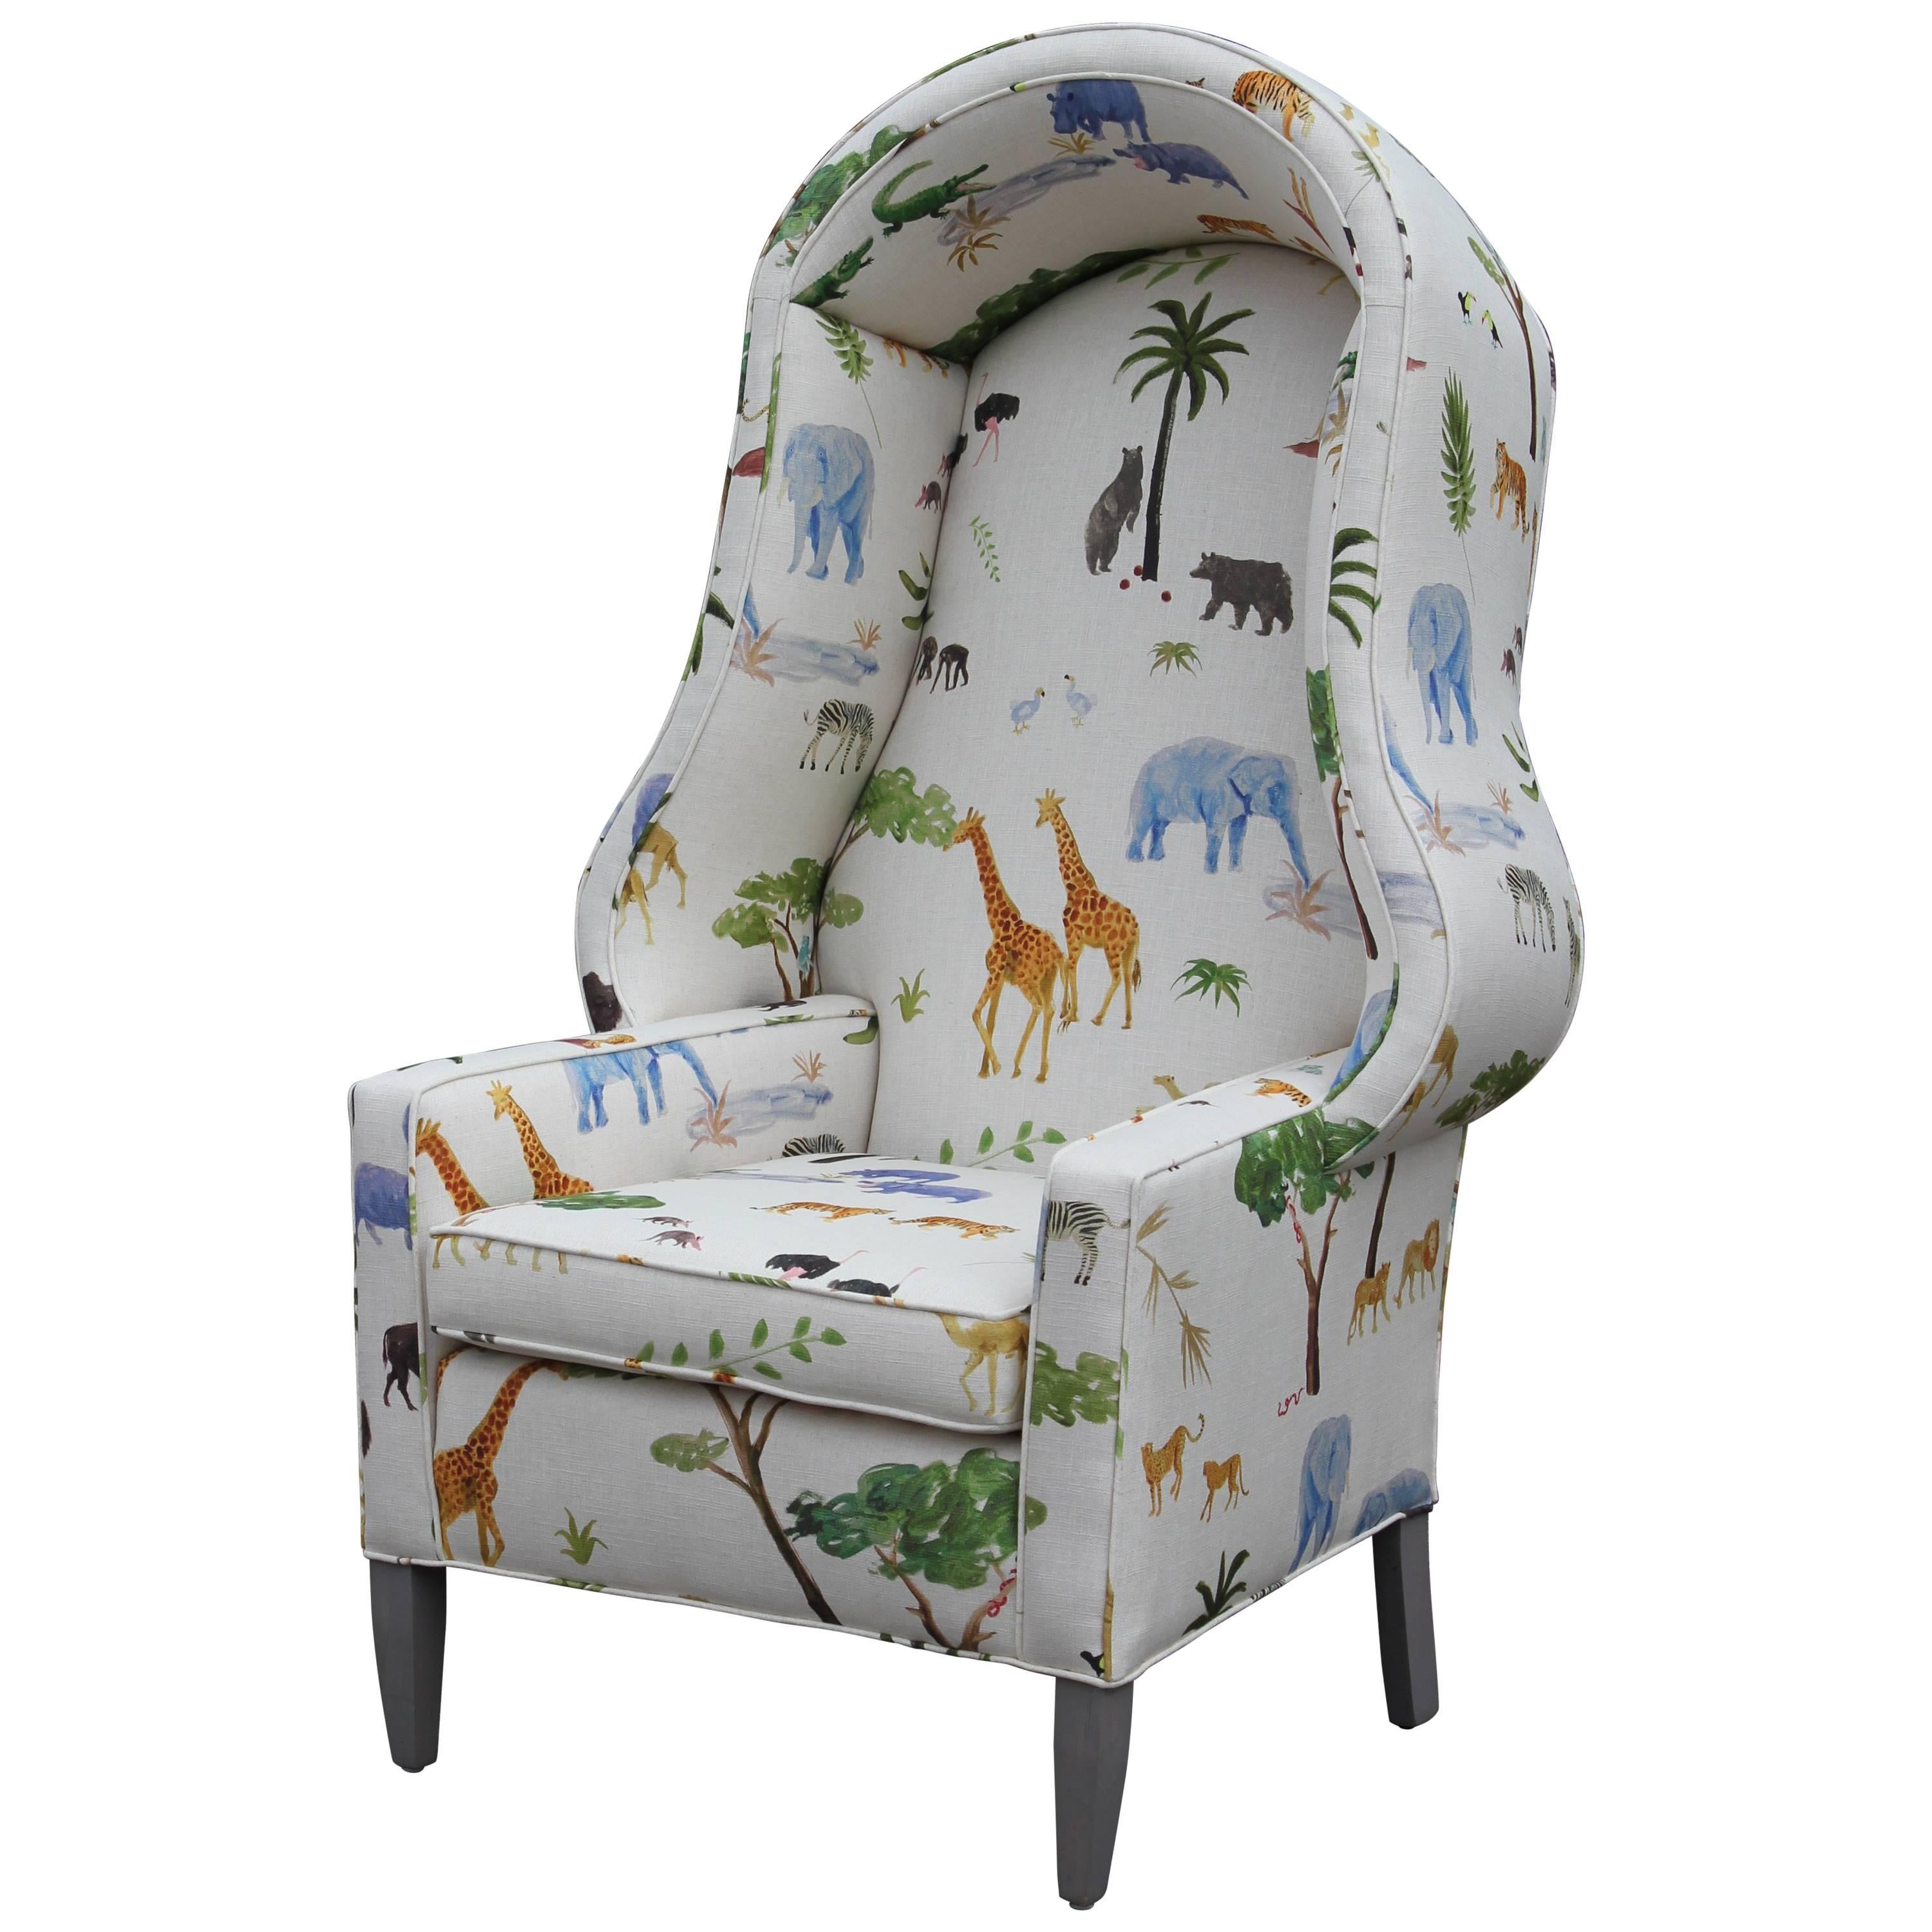 Modern Porter's Chair in the Style of Baker Furniture in Safari Animal Print